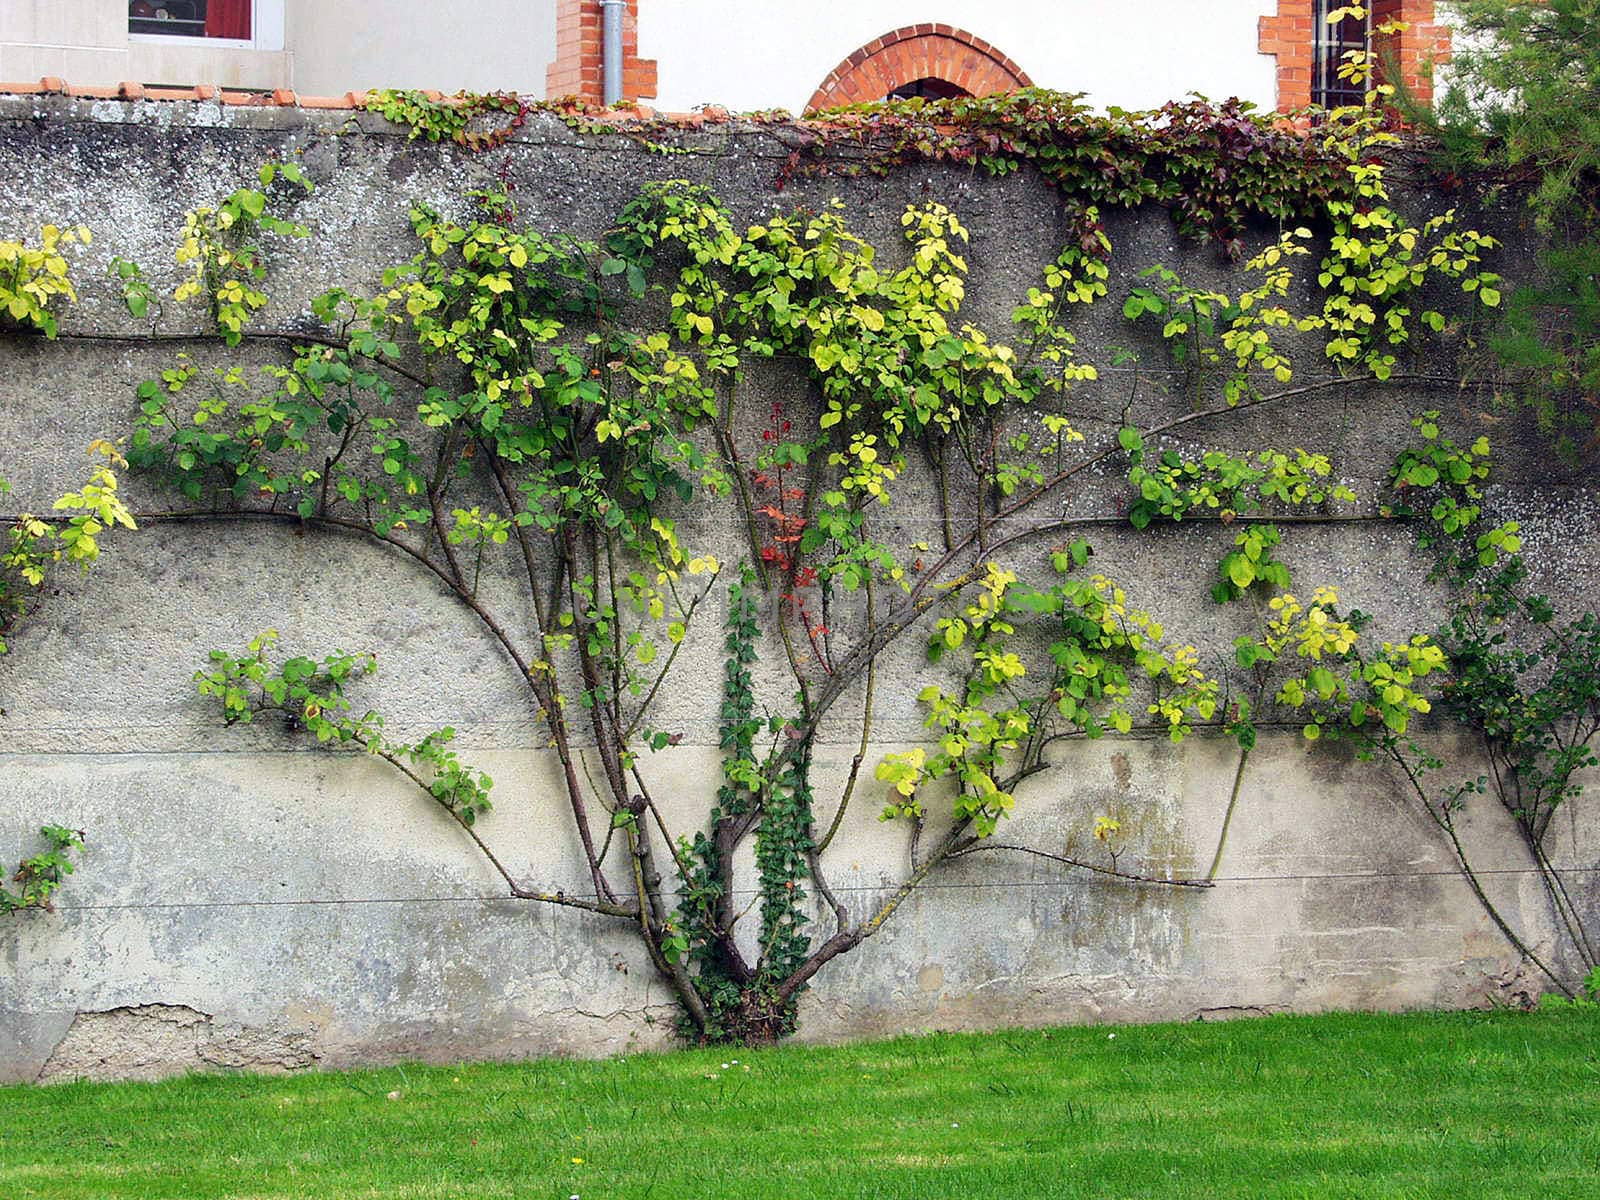 Bush decorative grapes on a concrete fence by NickNick